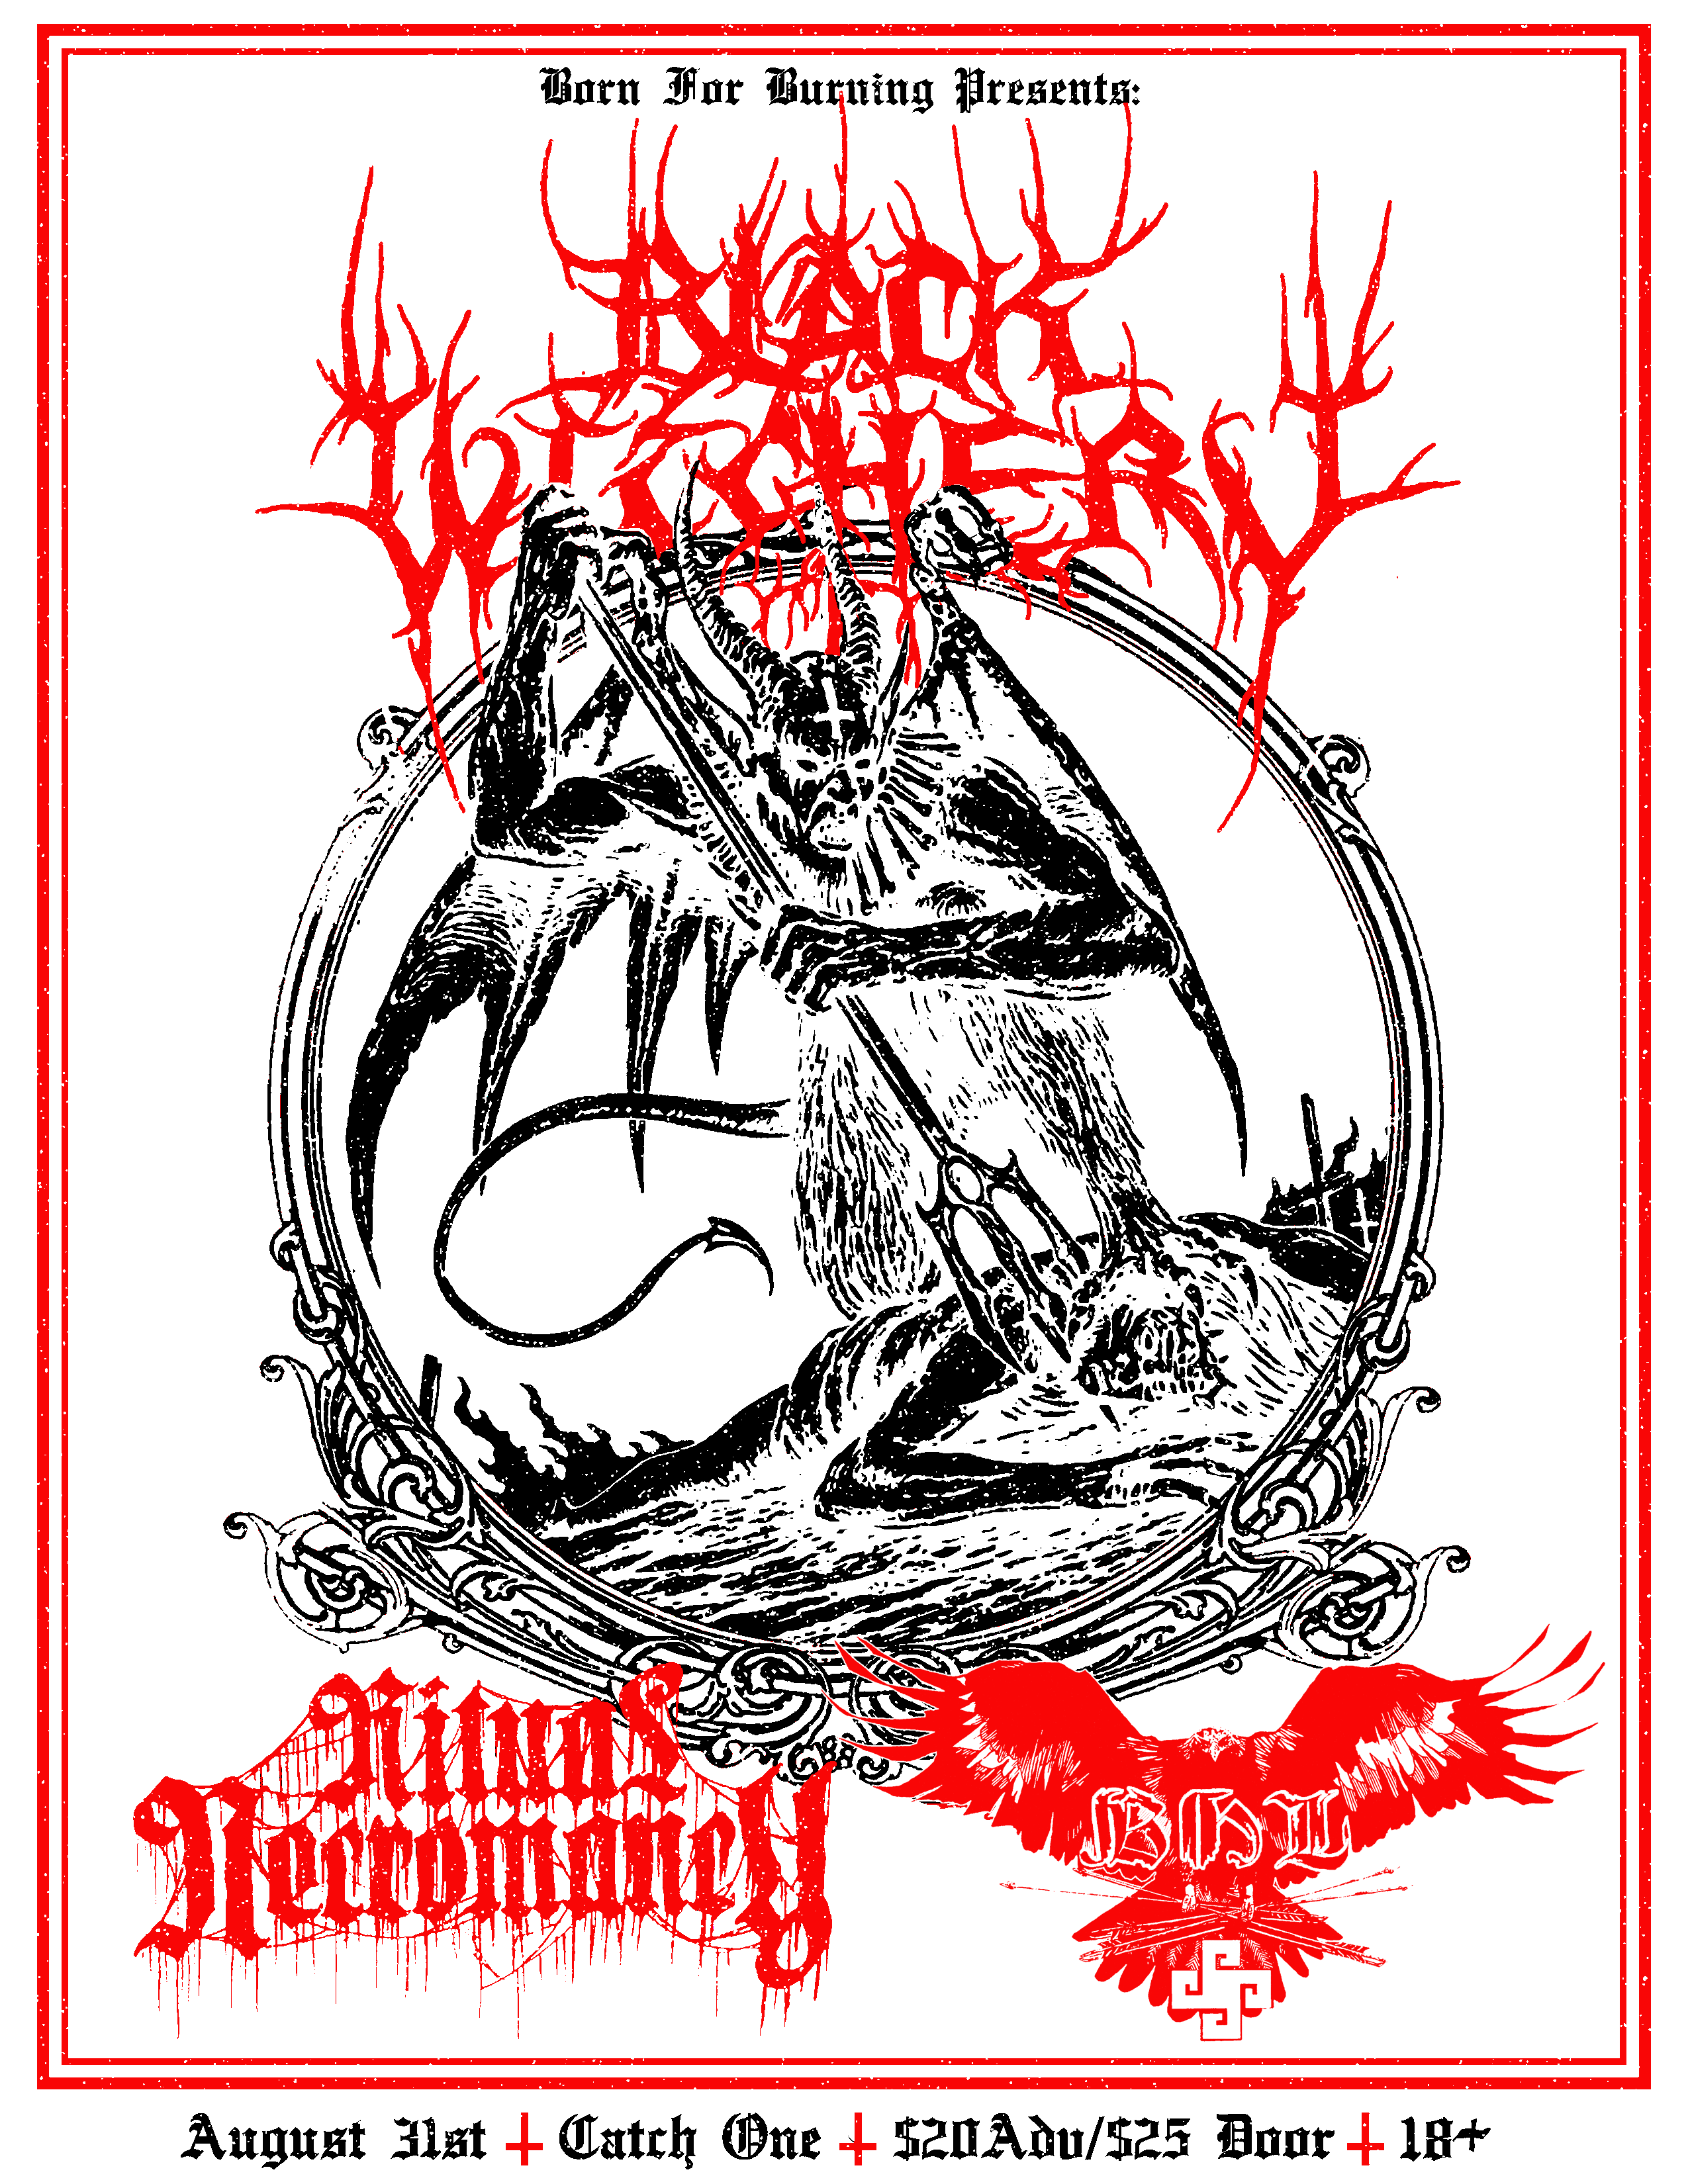 Black Witchery, Ritual Necromancy, Blue Hummingbird on the Left